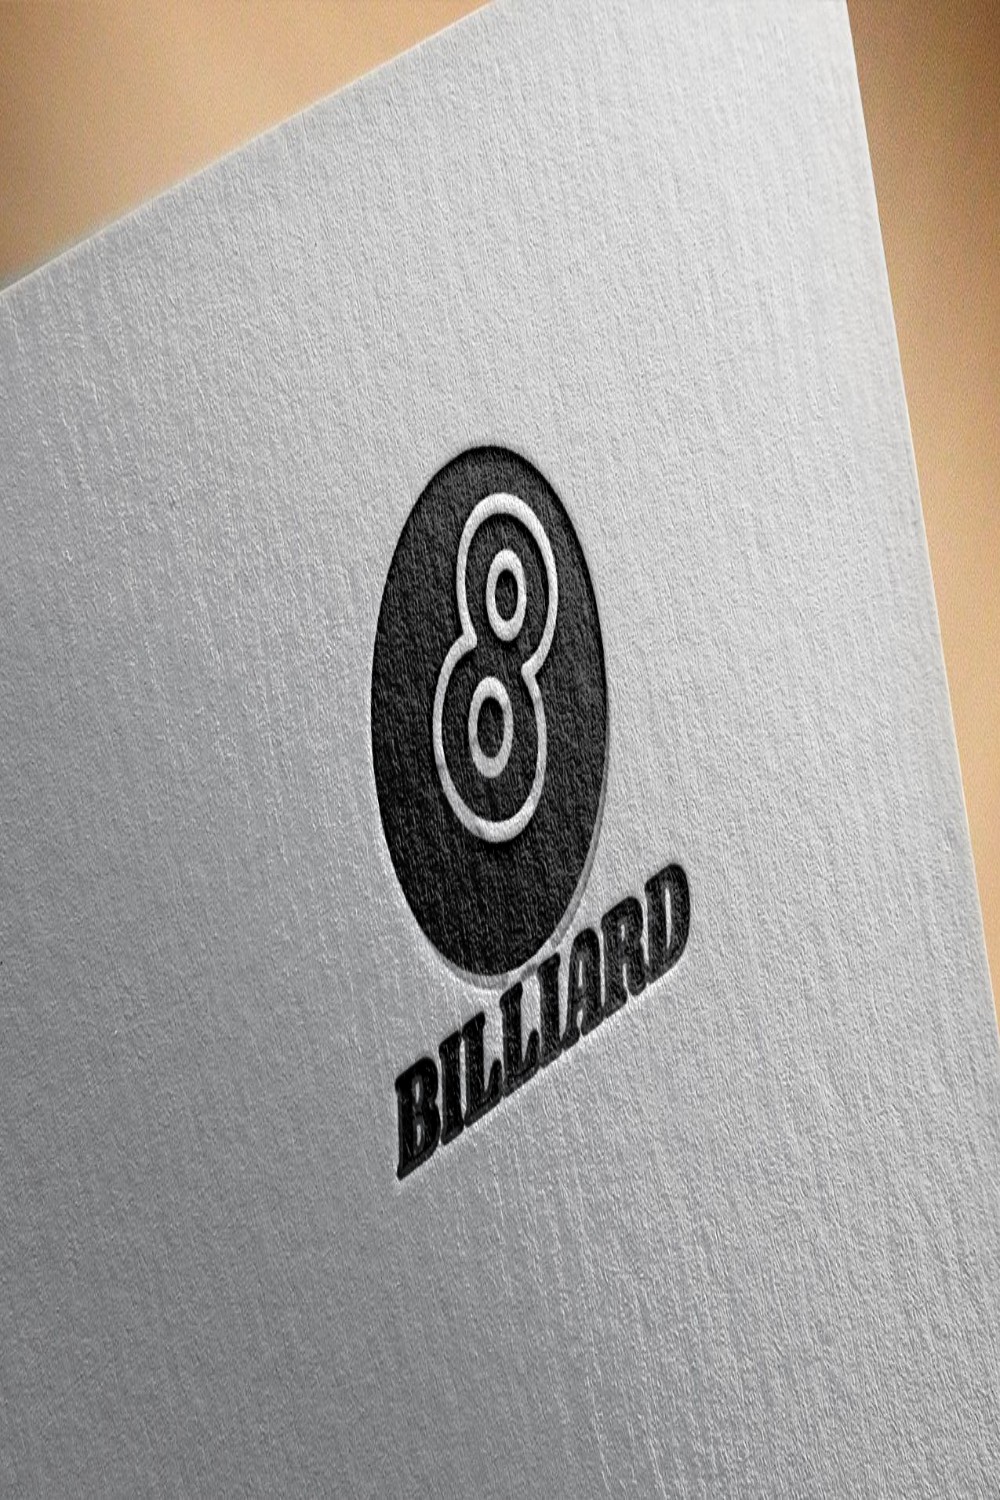 Billiard Logo Design Pinterest collage image.